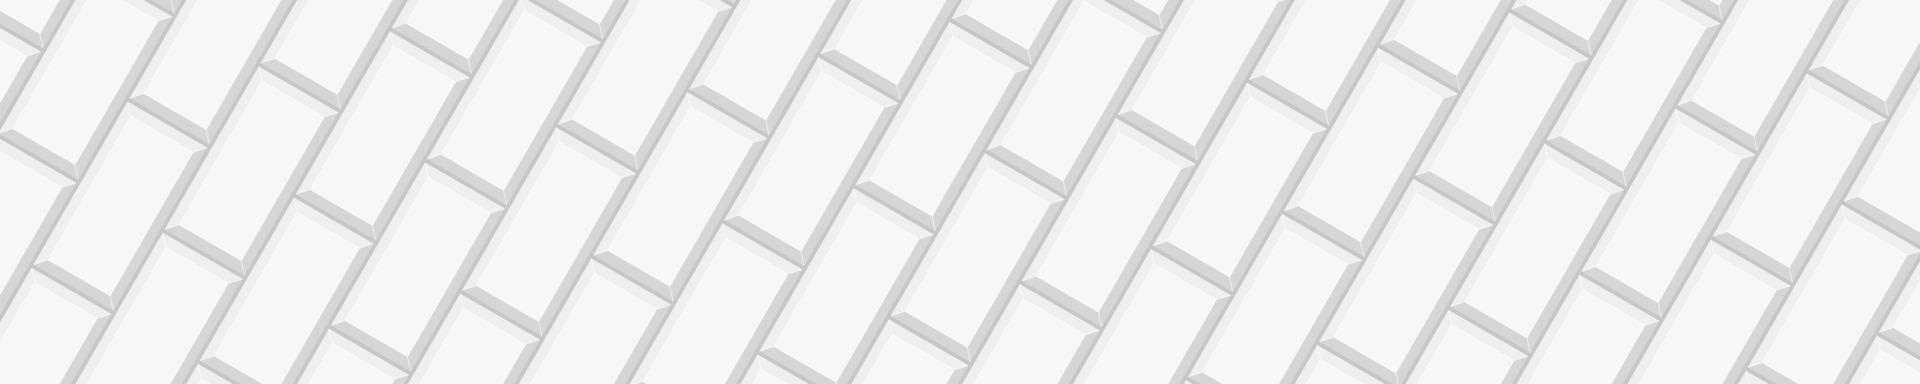 blanco rectángulos loseta en diagonal acuerdo. cerámico o Roca ladrillo pared horizontal antecedentes. cocina protector contra salpicaduras, baño piso, fachada textura sin costura modelo vector